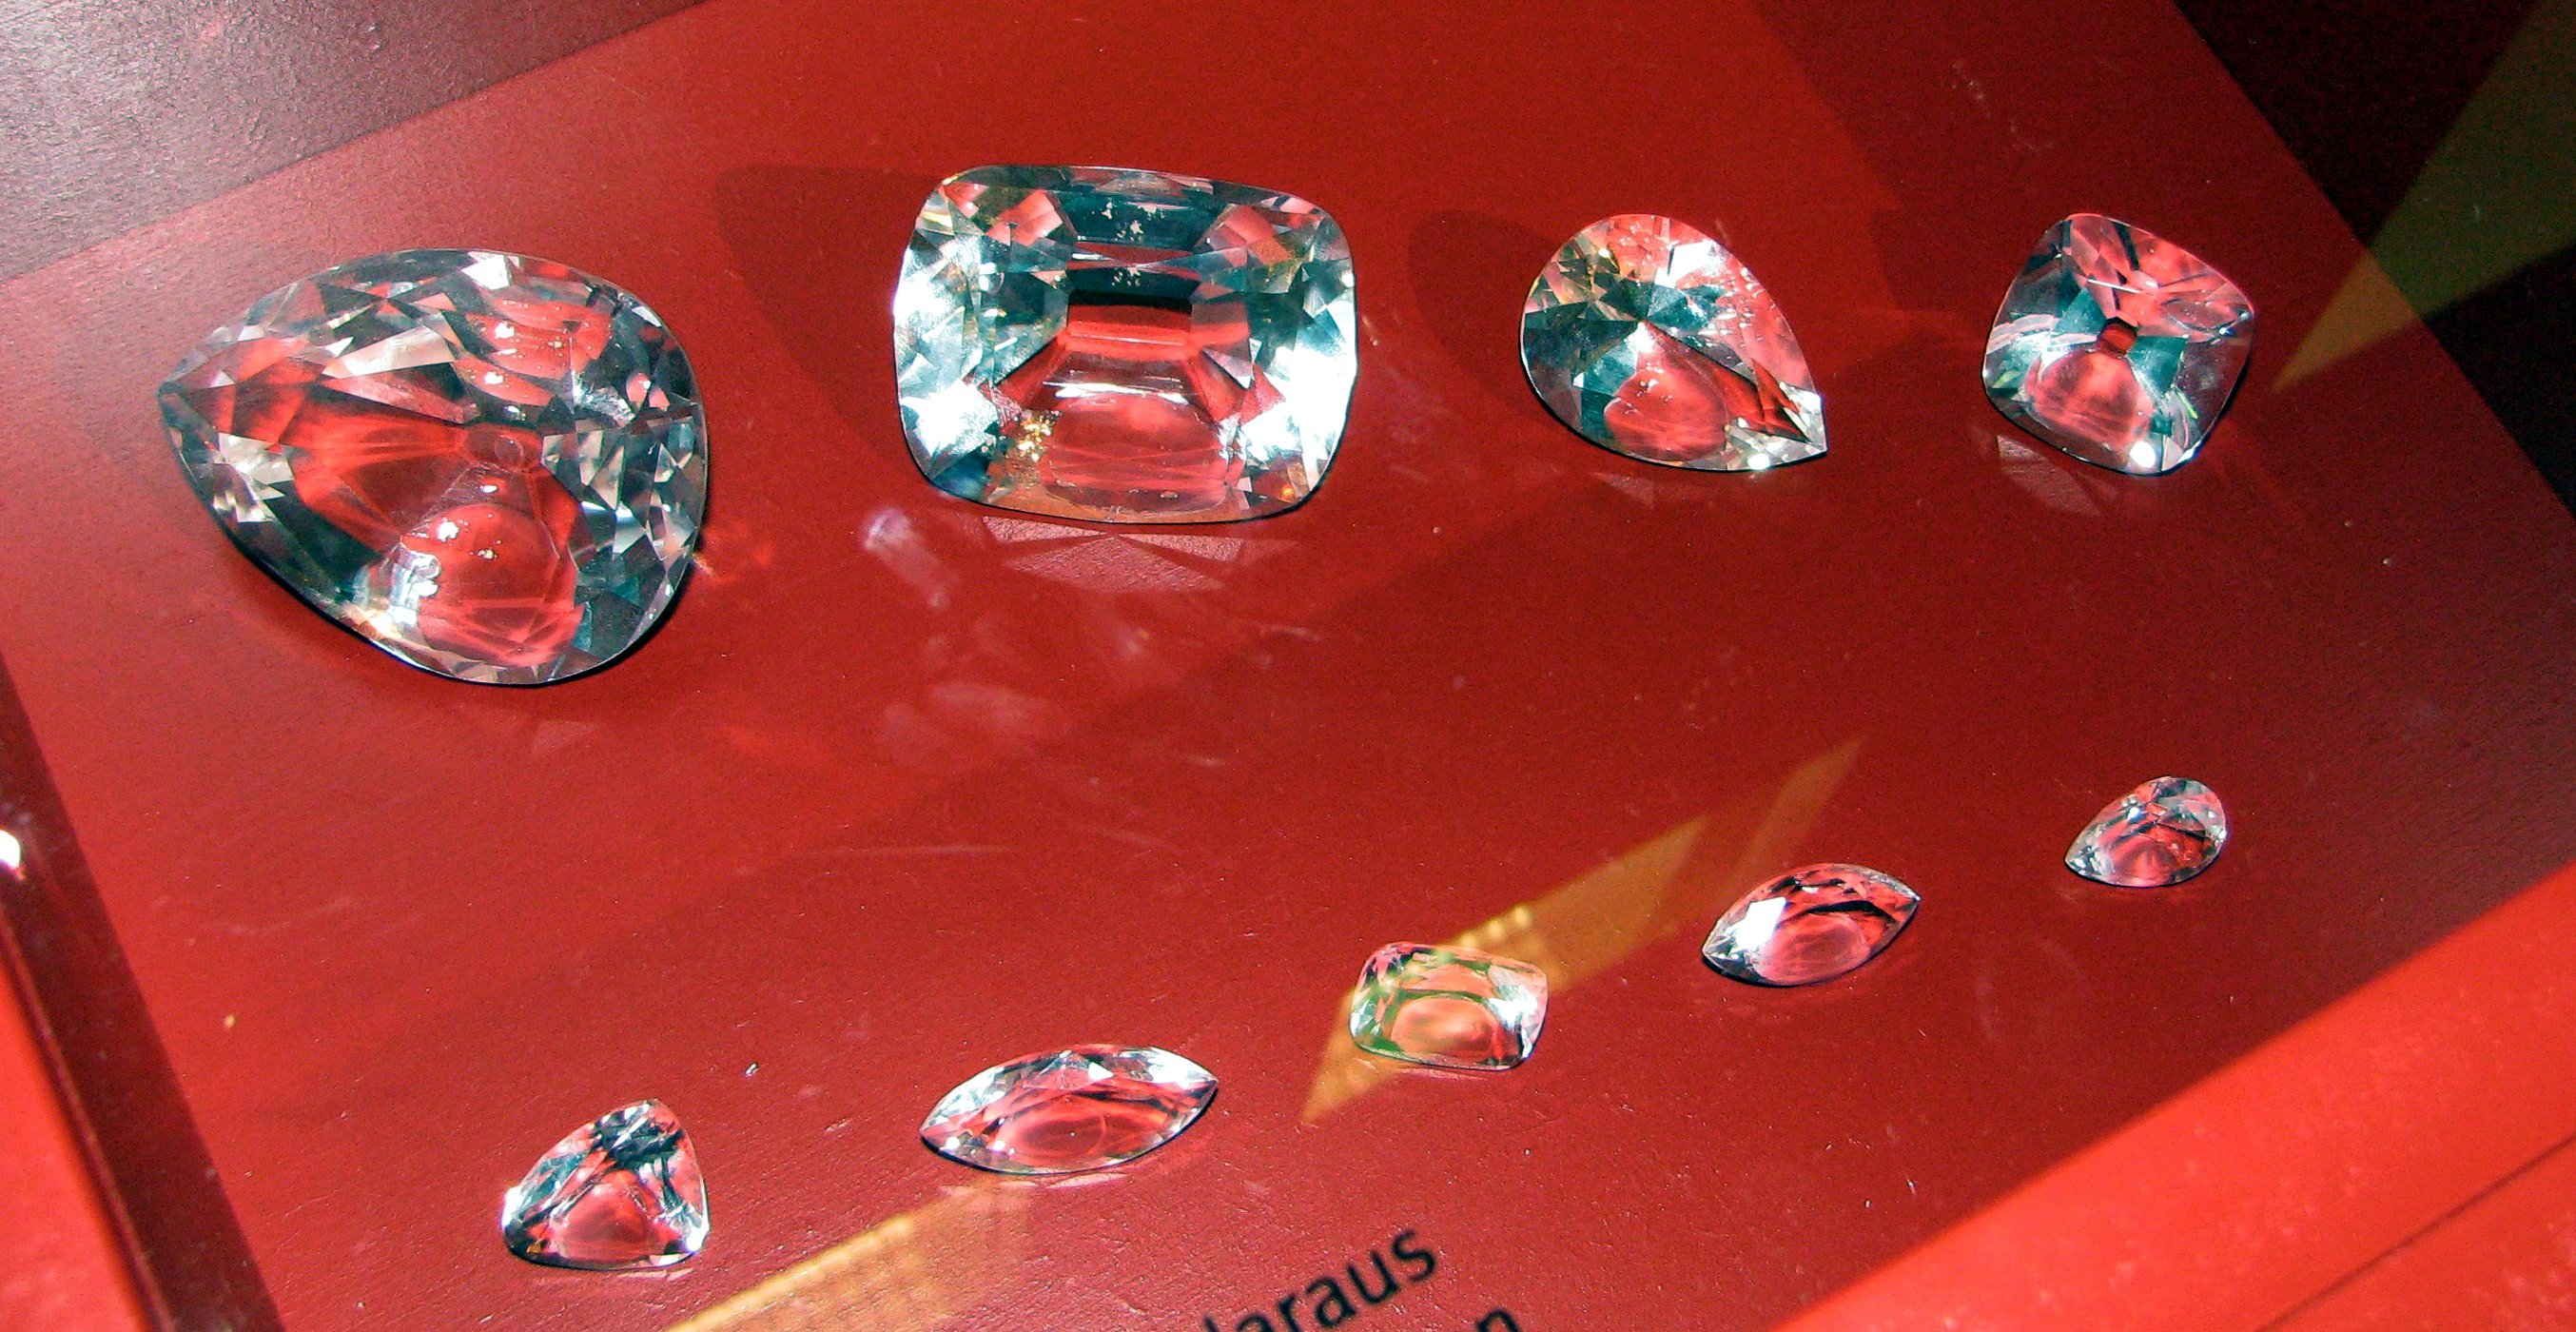 Cullinan Diamant Wikipedia